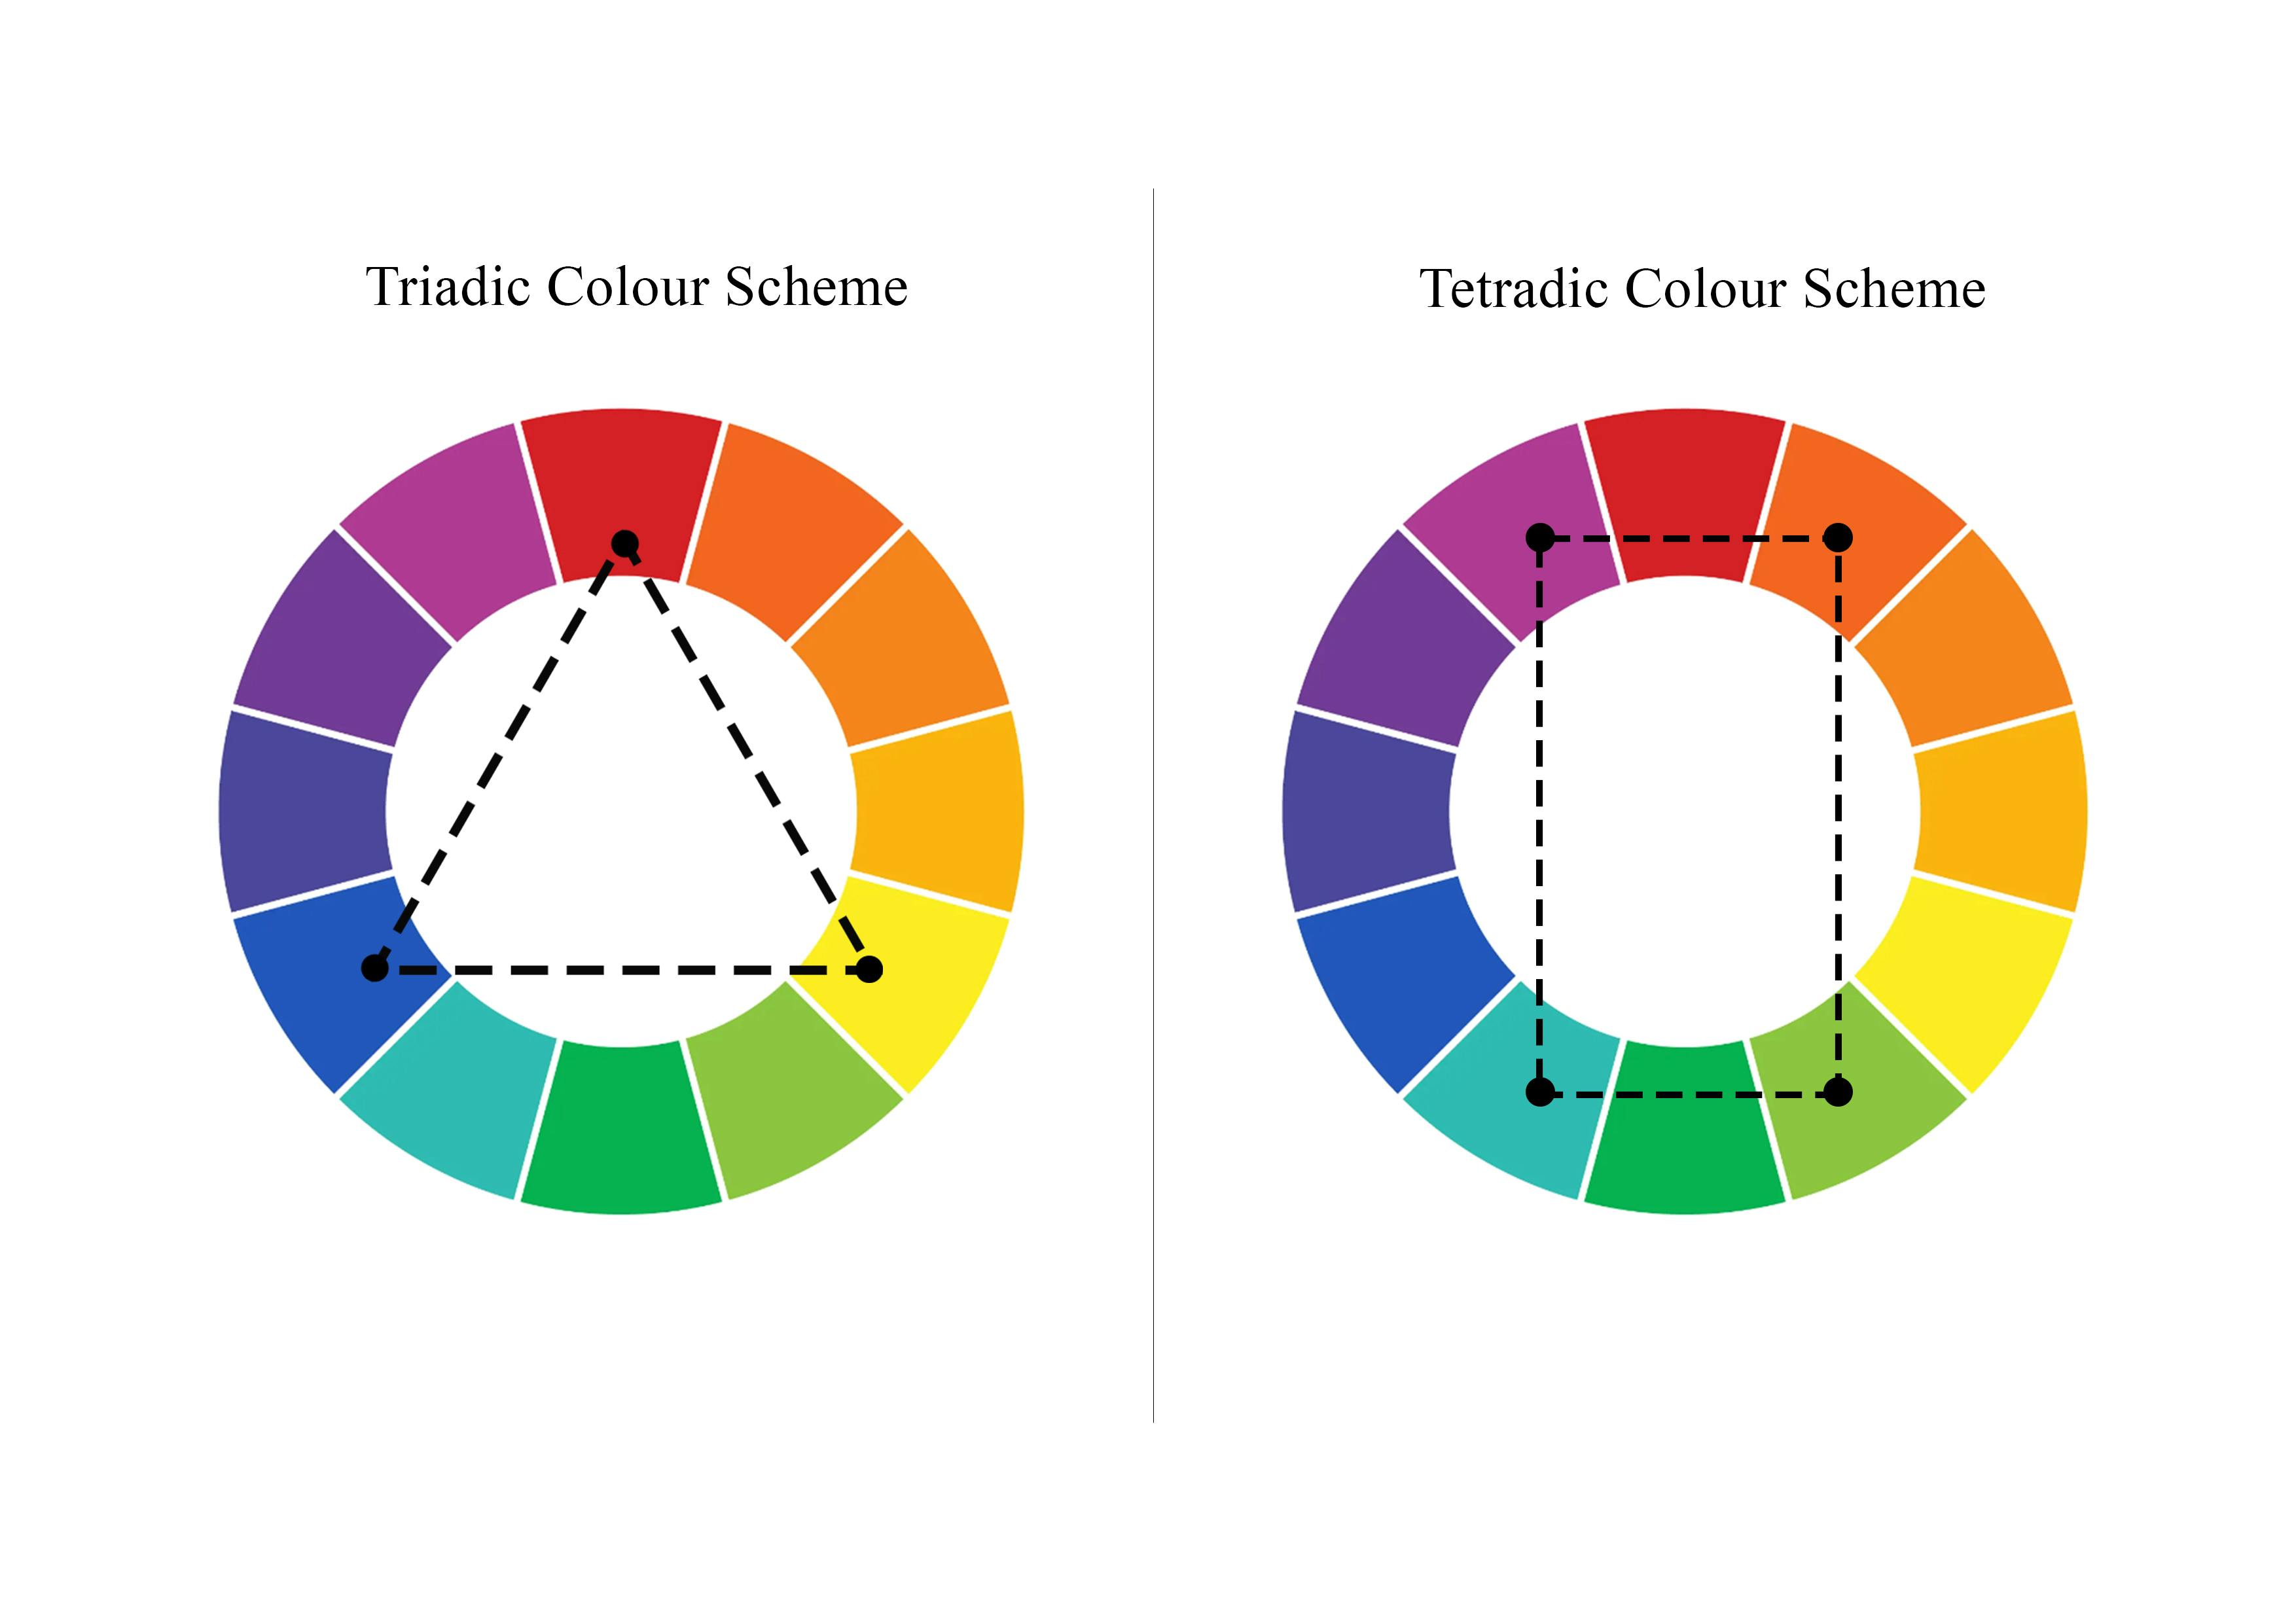 Triadic and Tetradic Colour Schemes